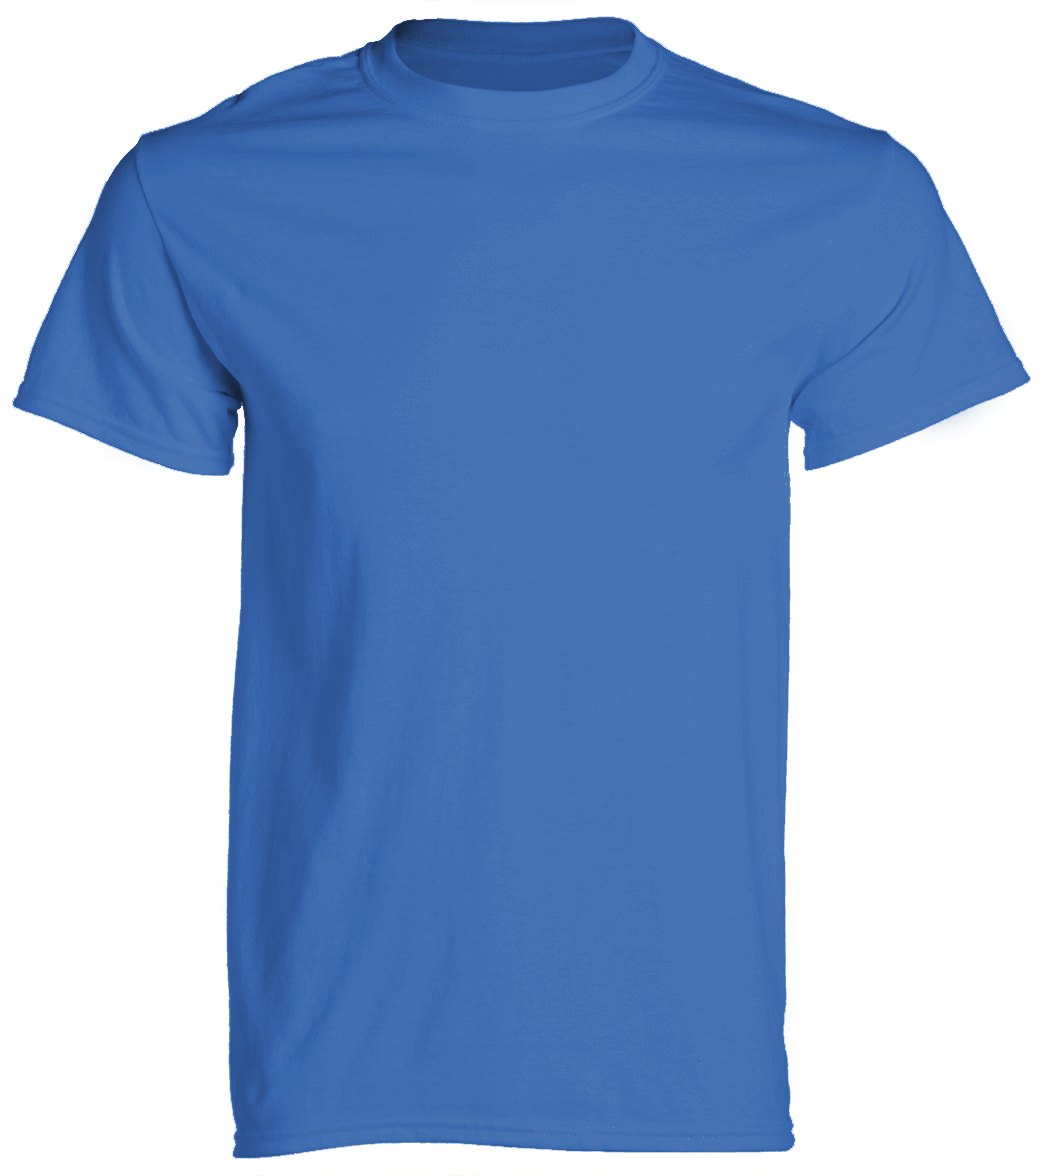 Men's Cotton Short Sleeve T-Shirt - Royal Blue X-Small - Swimoutlet.com